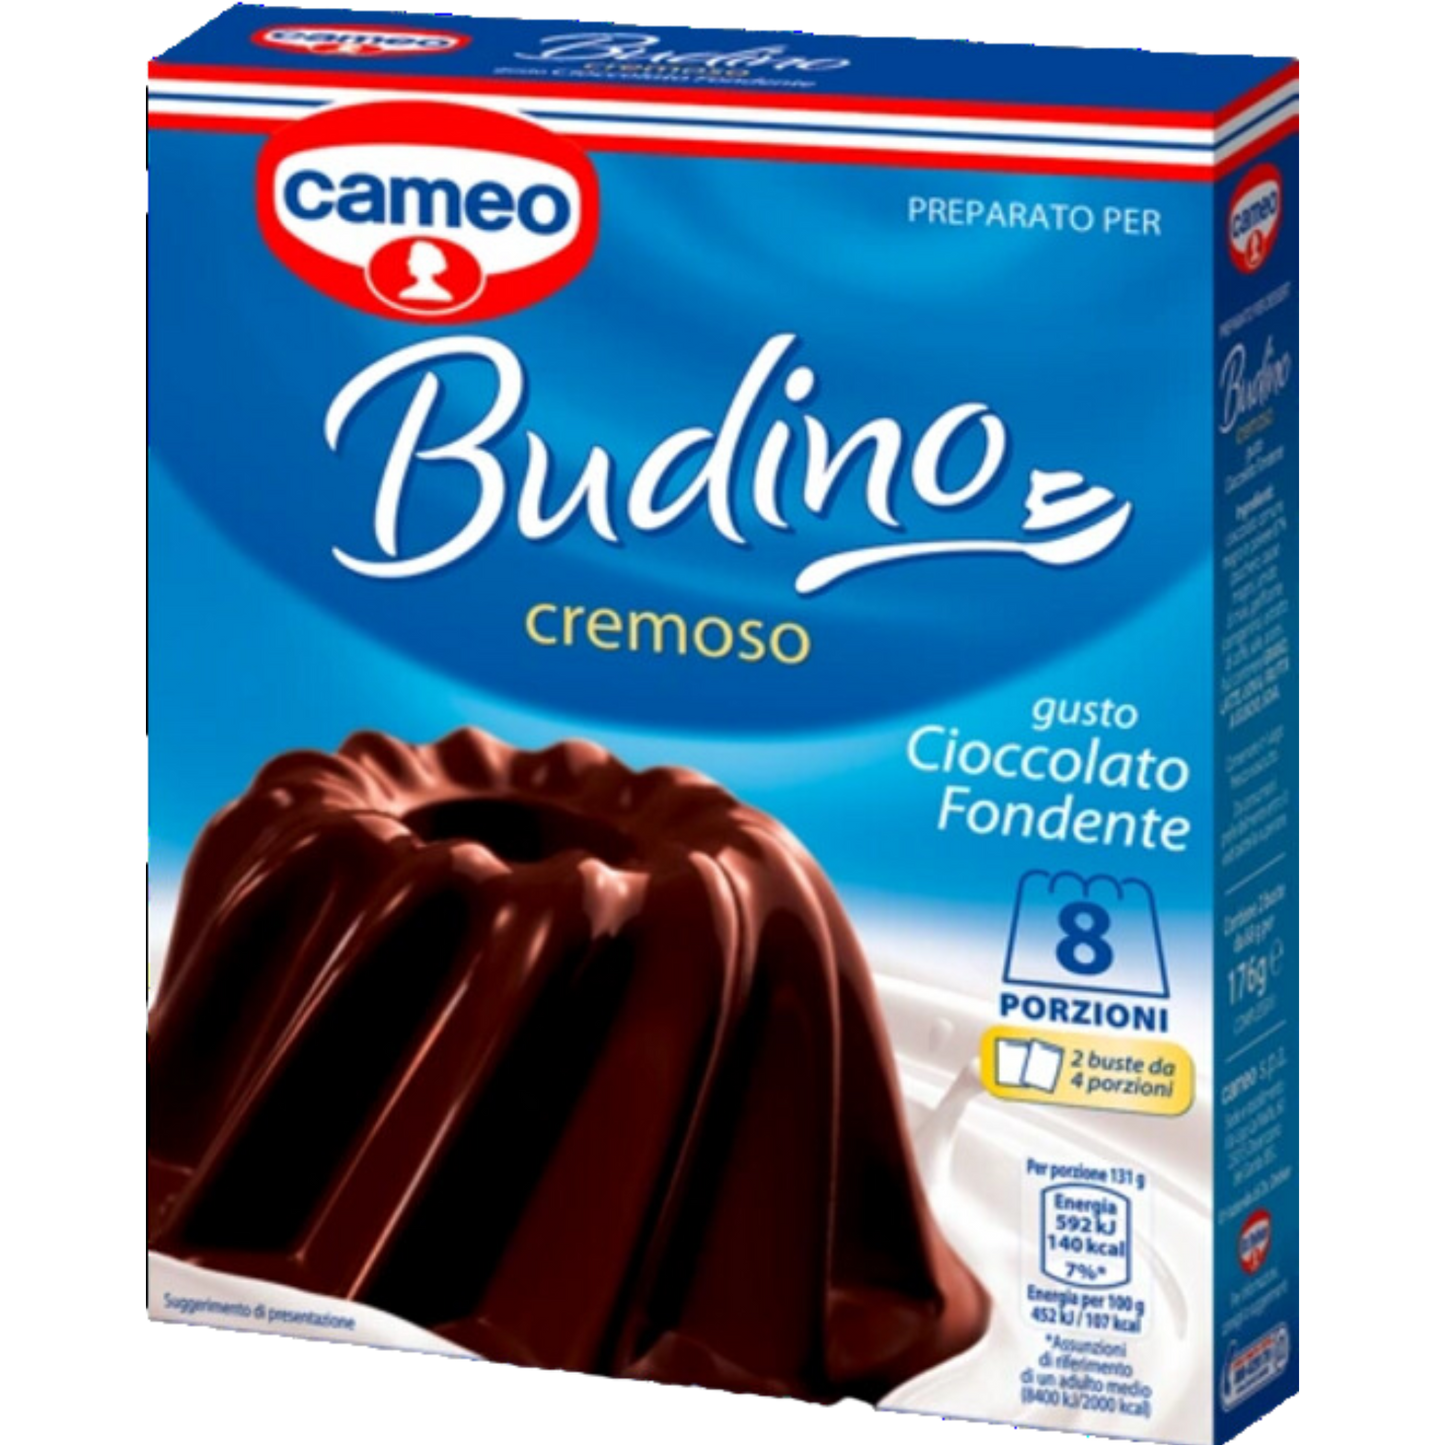 Budino Cioccolato x 8 serves